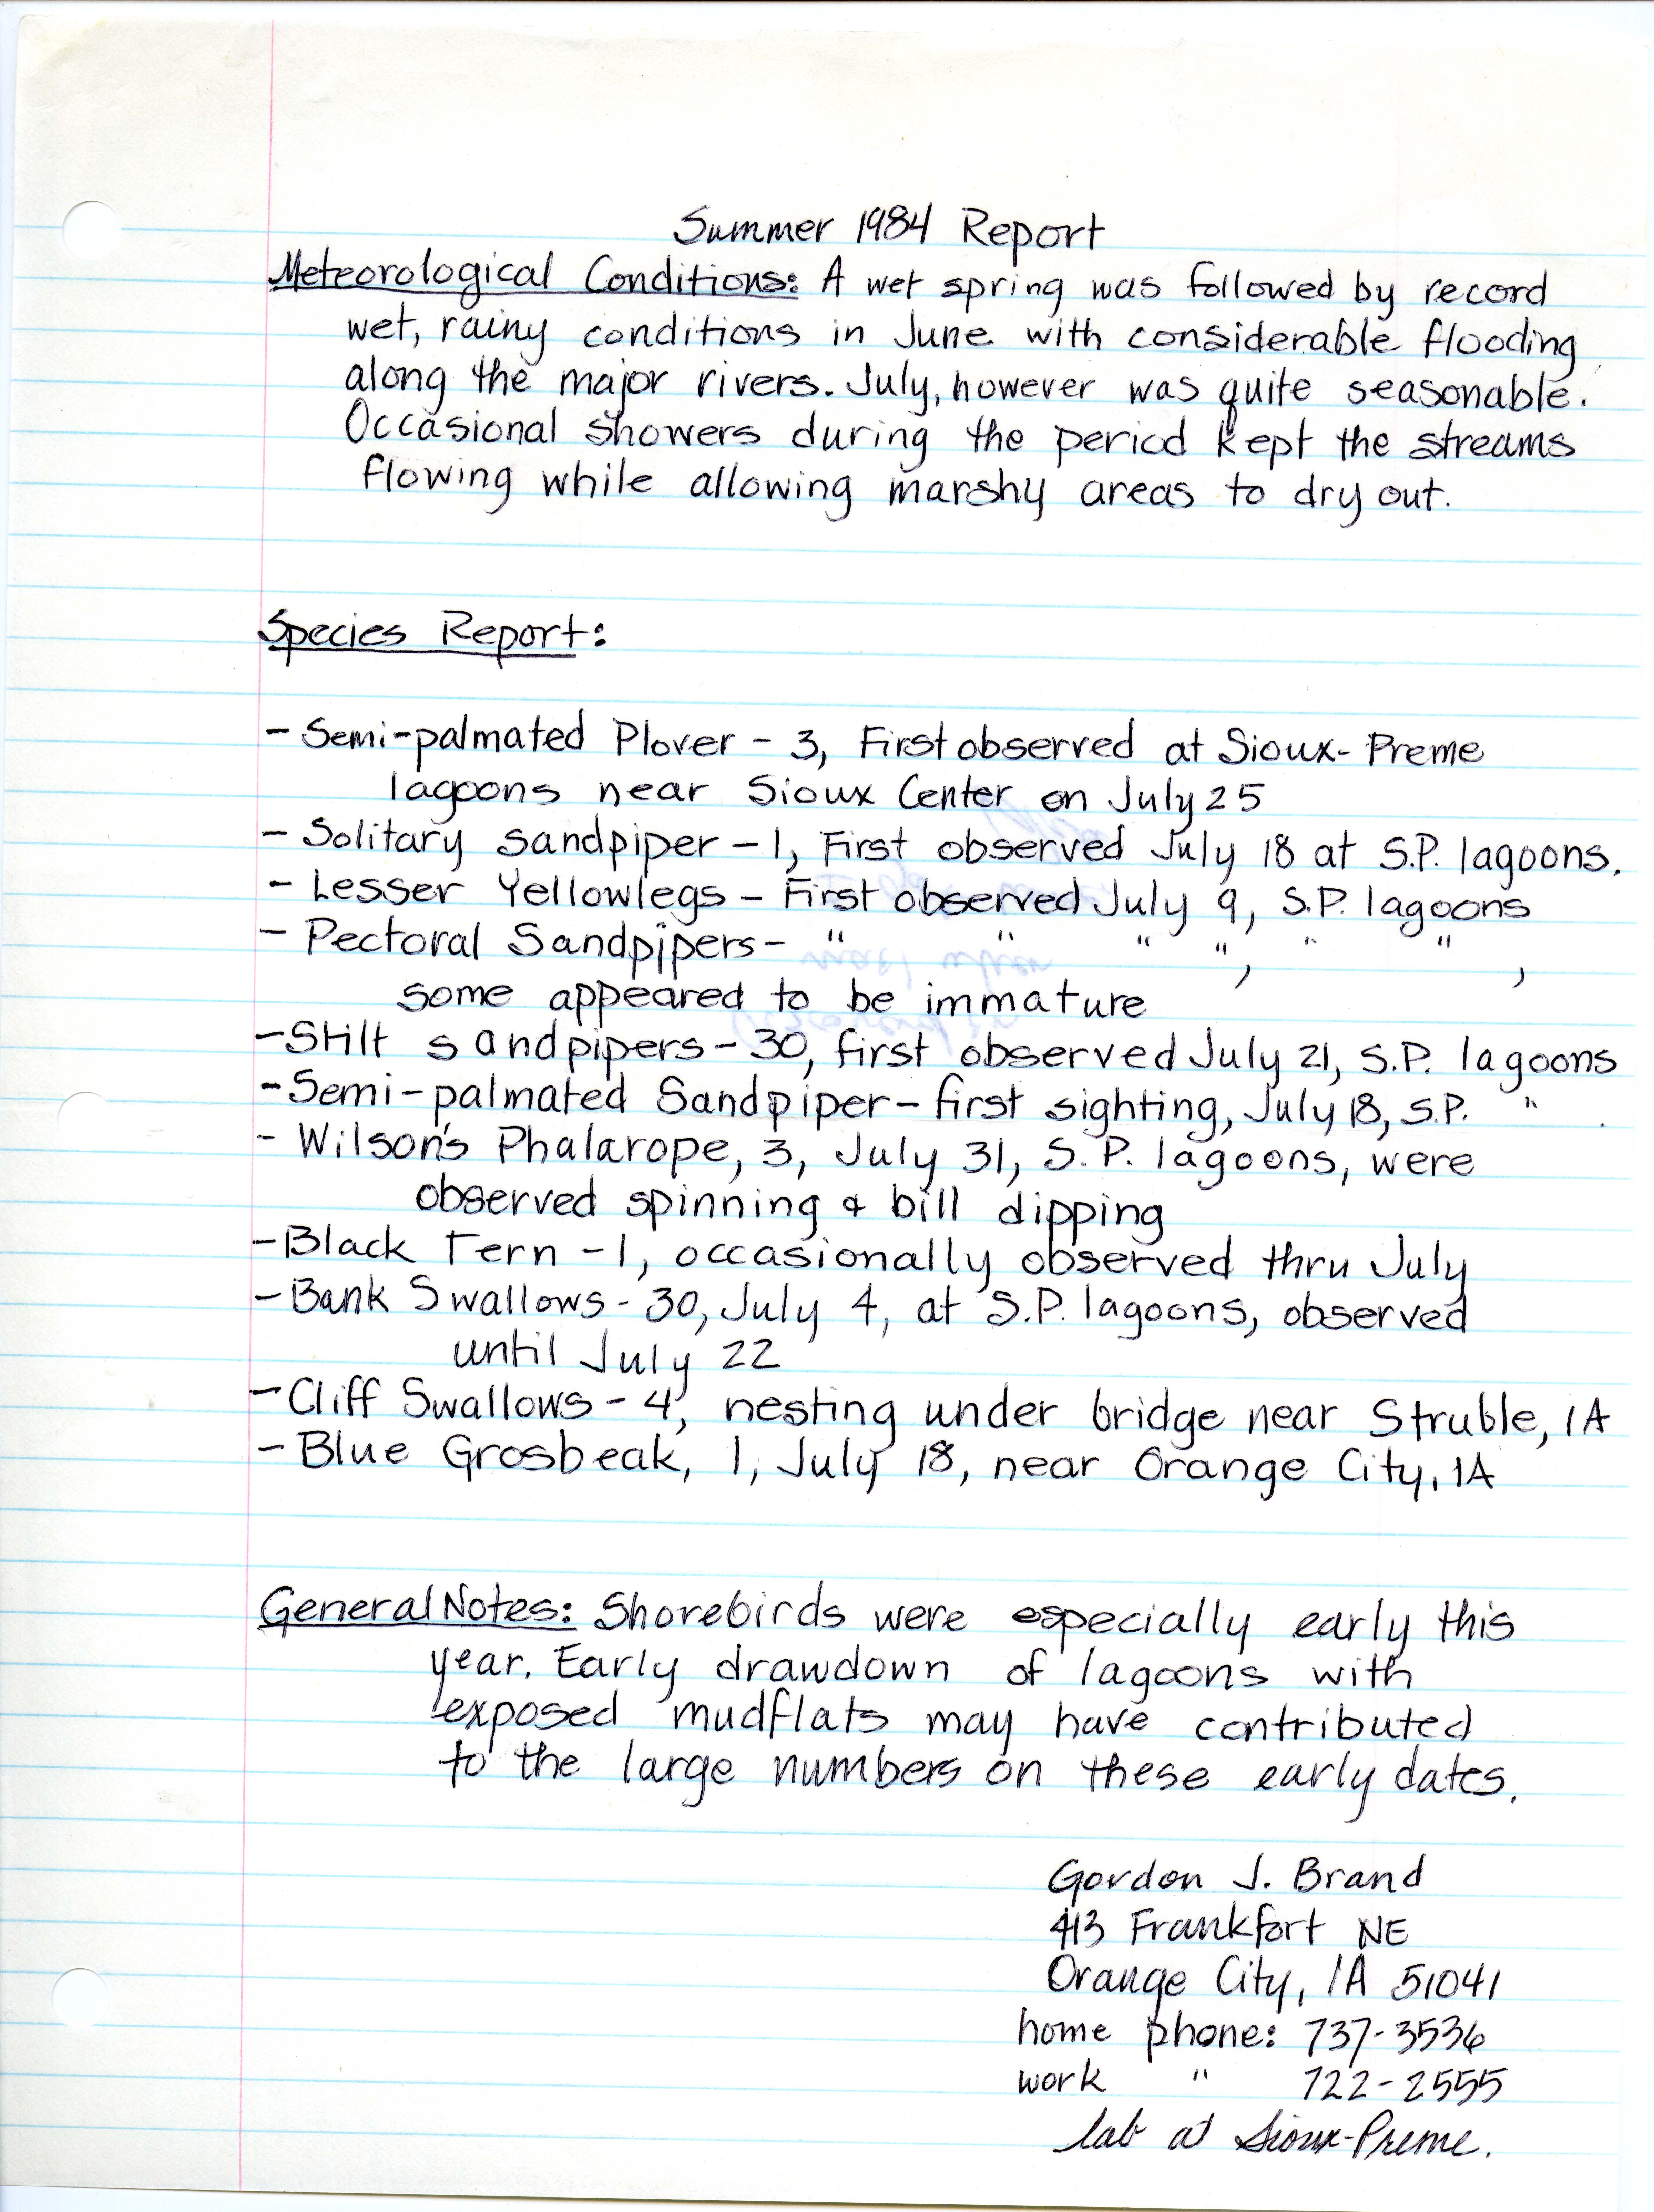 Field notes contributed by Gordon Brand, Orange City, Iowa, summer 1984